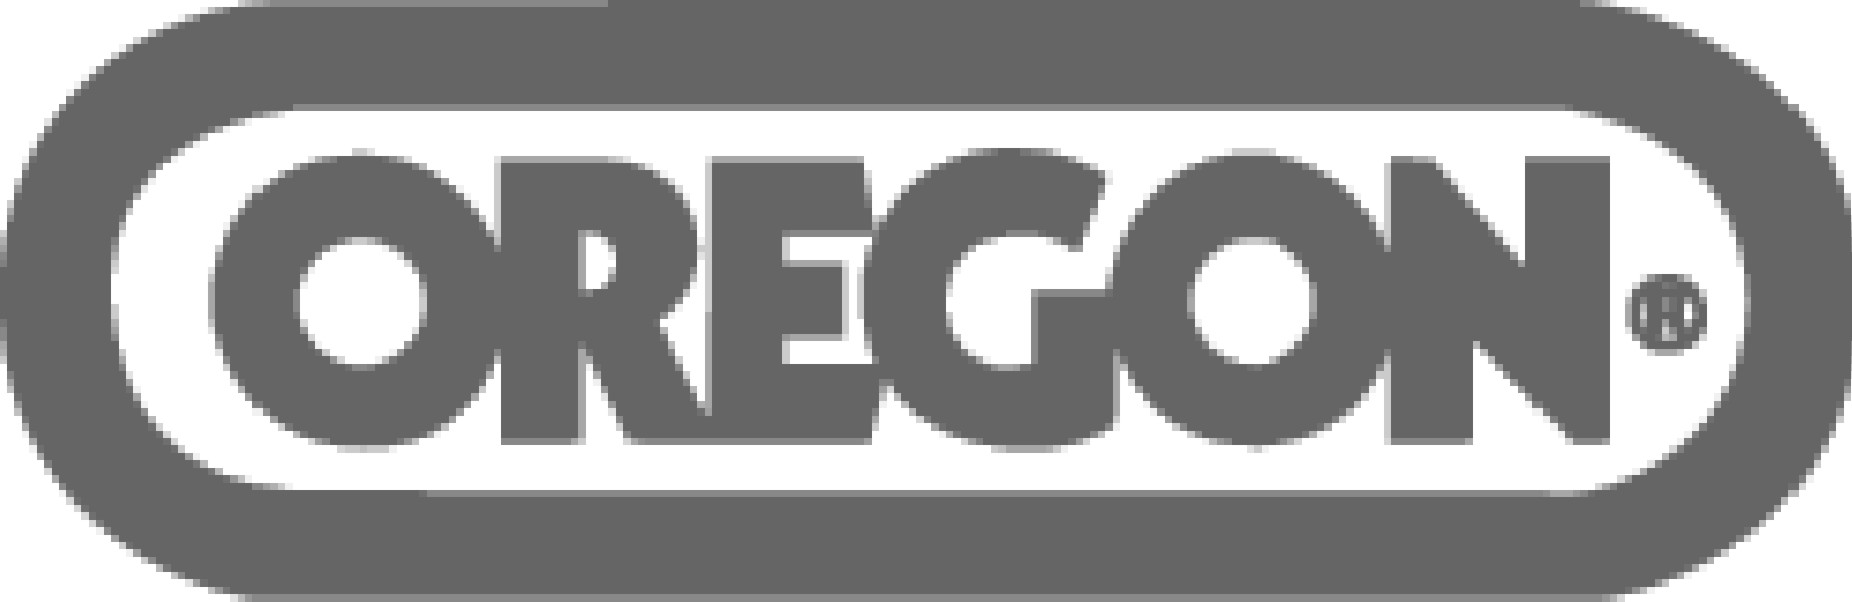 Oregon Logo.jpg